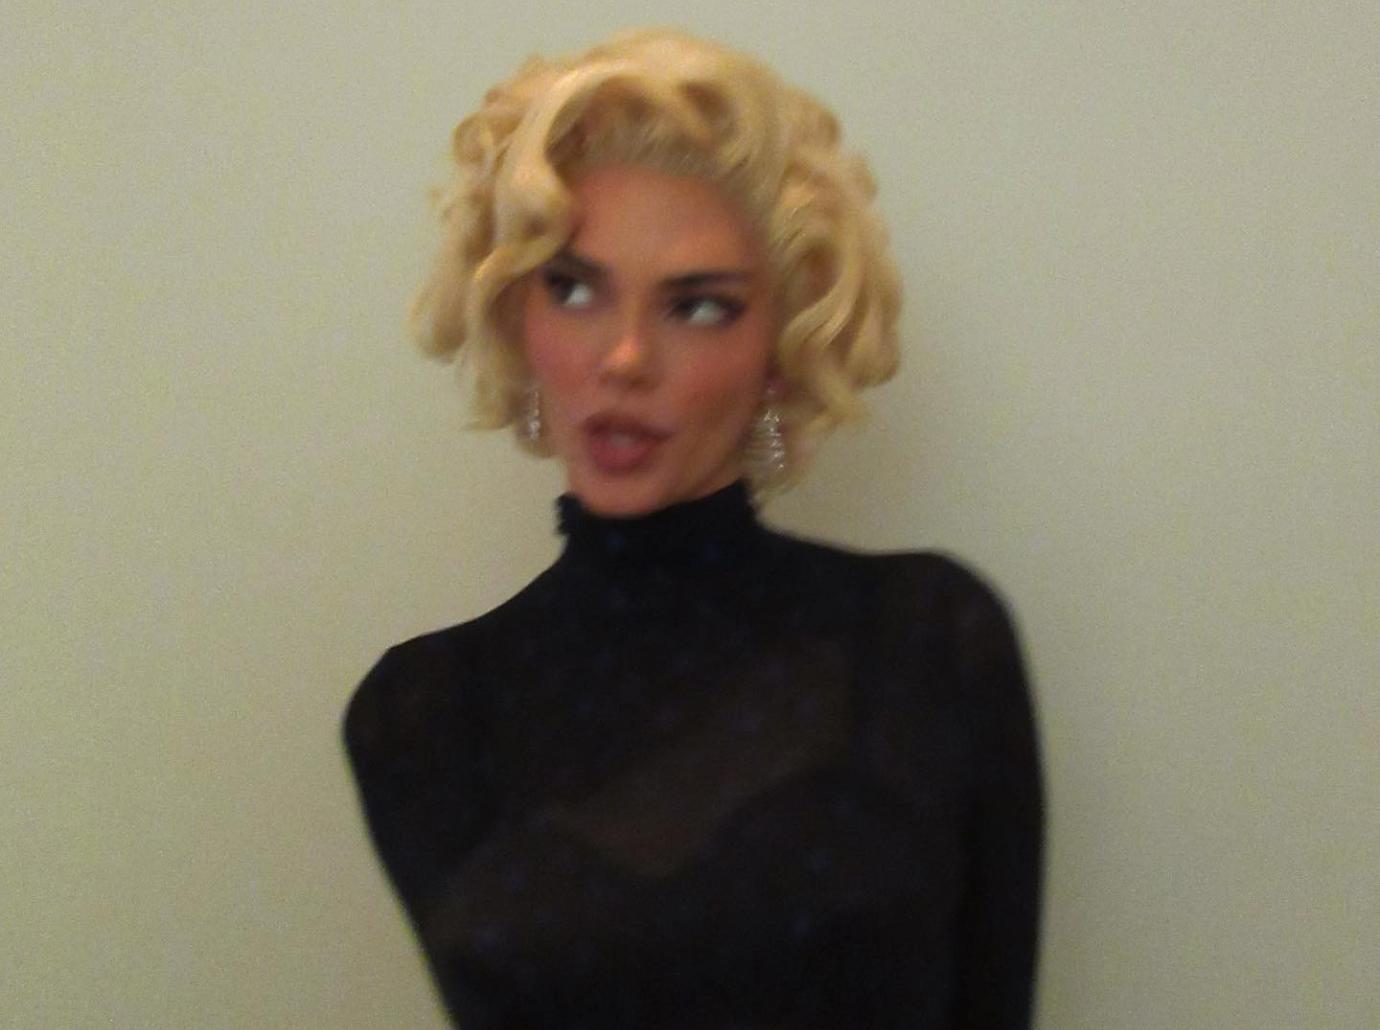 Kylie Jenner's Marilyn Monroe Halloween Costume Details